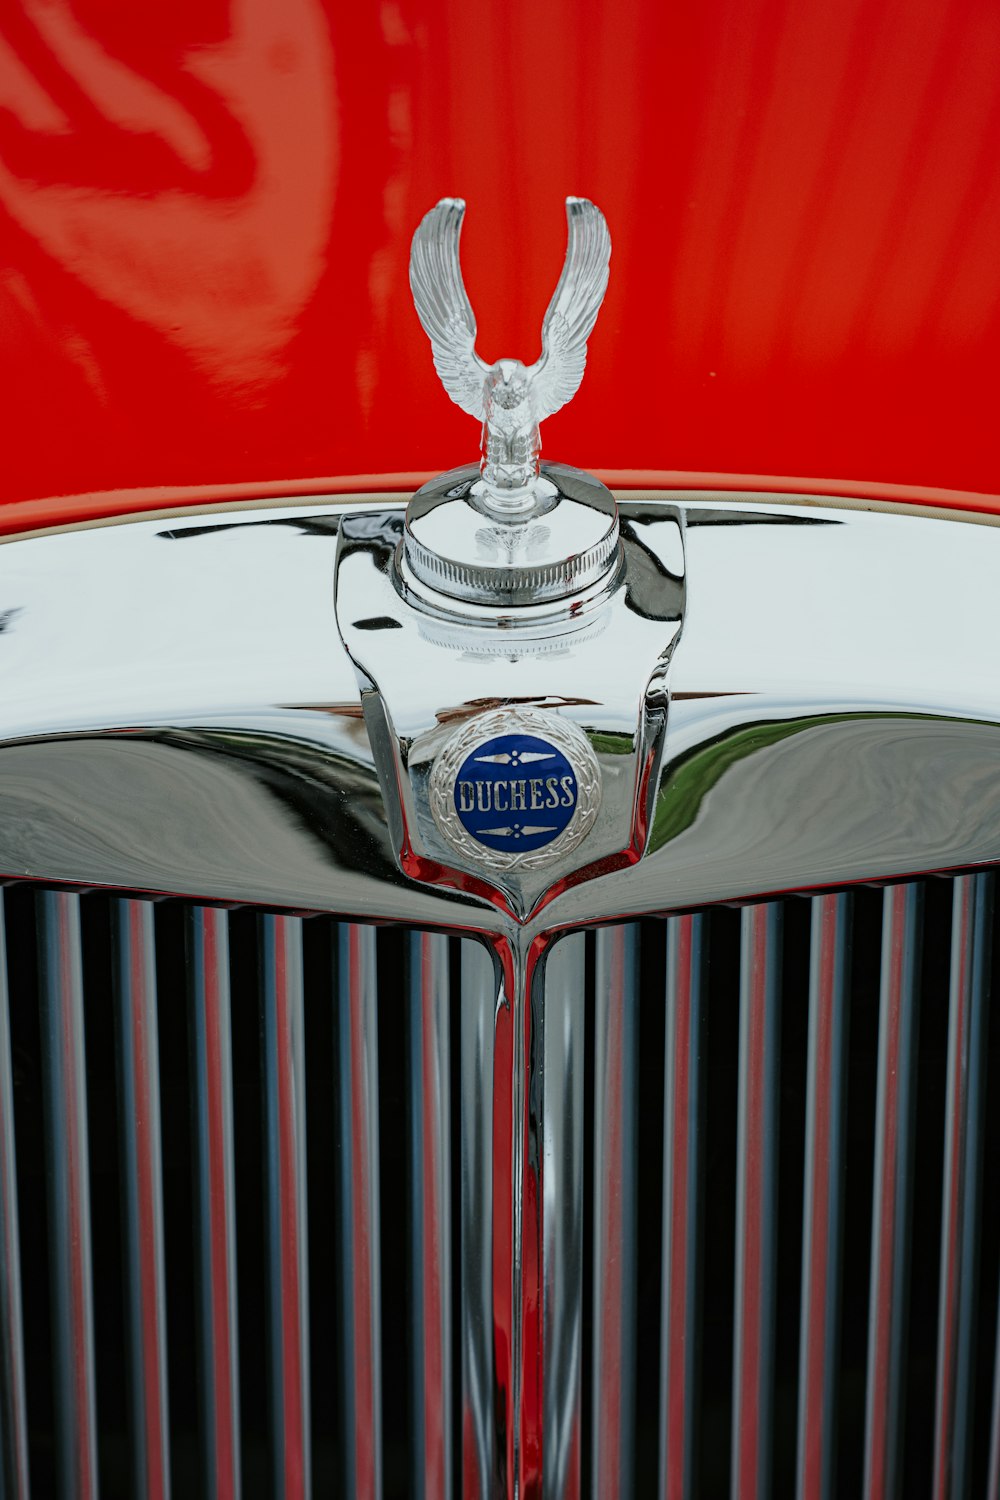 Rolls-Royce emblem